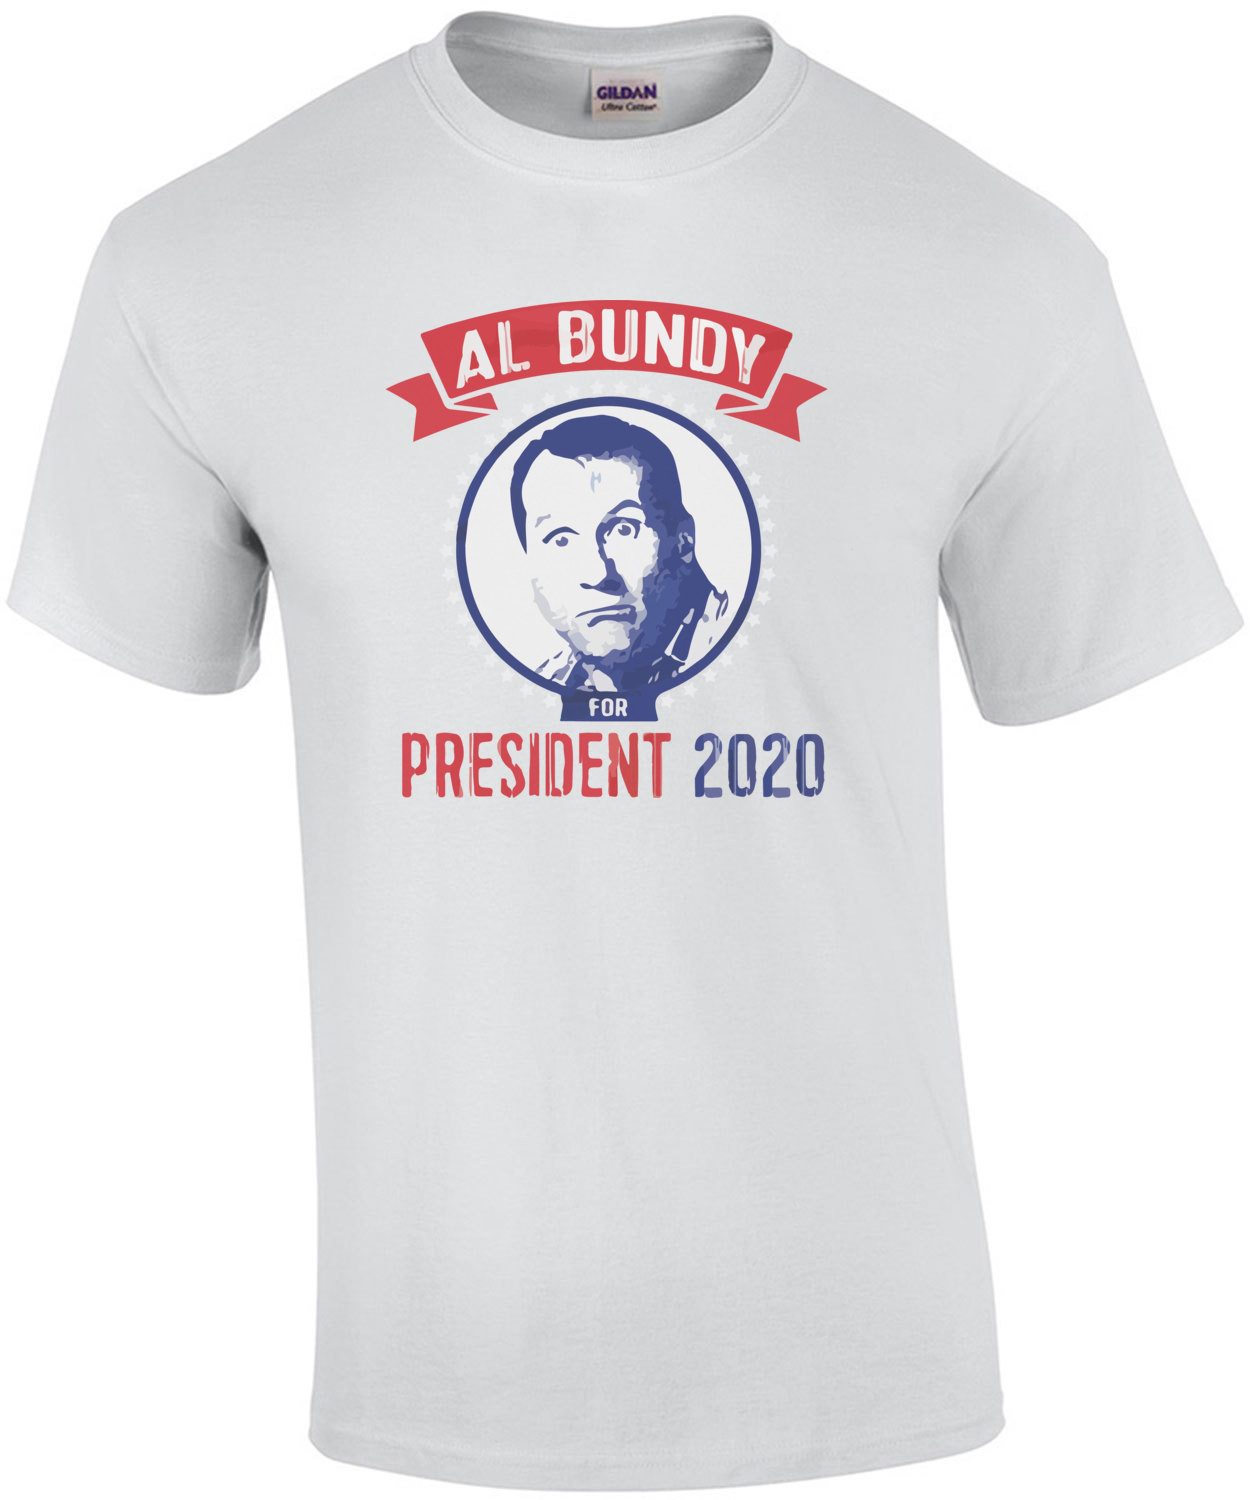 Al Bundy for President 2020 - Funny Election T-Shirt